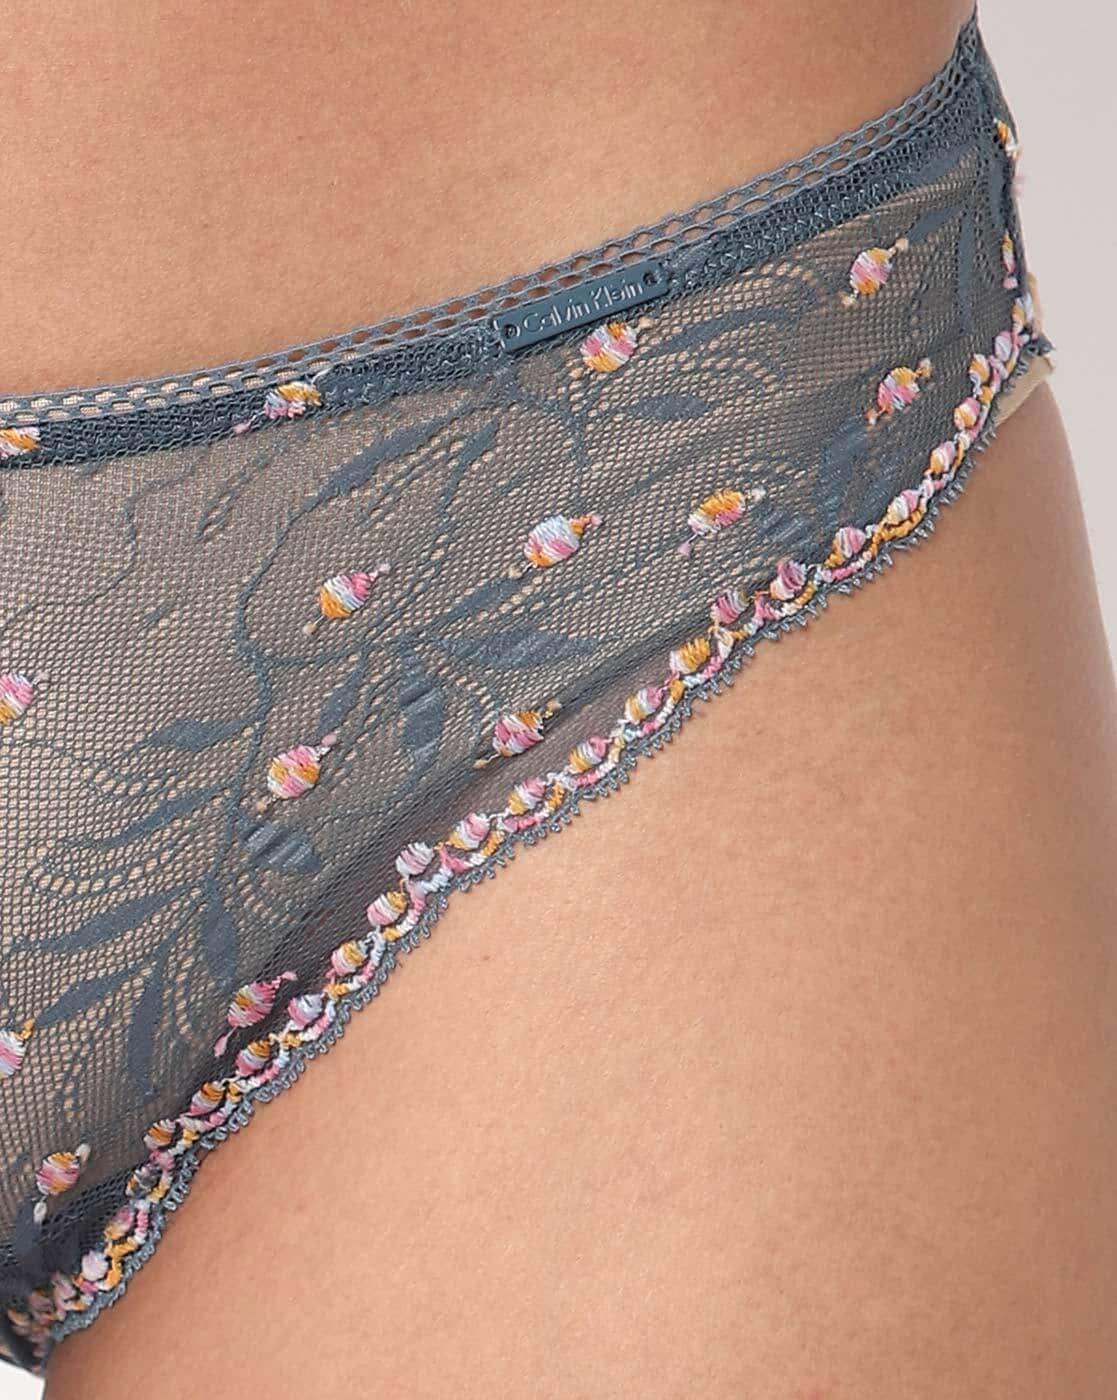 Buy Green Panties for Women by Calvin Klein Underwear Online